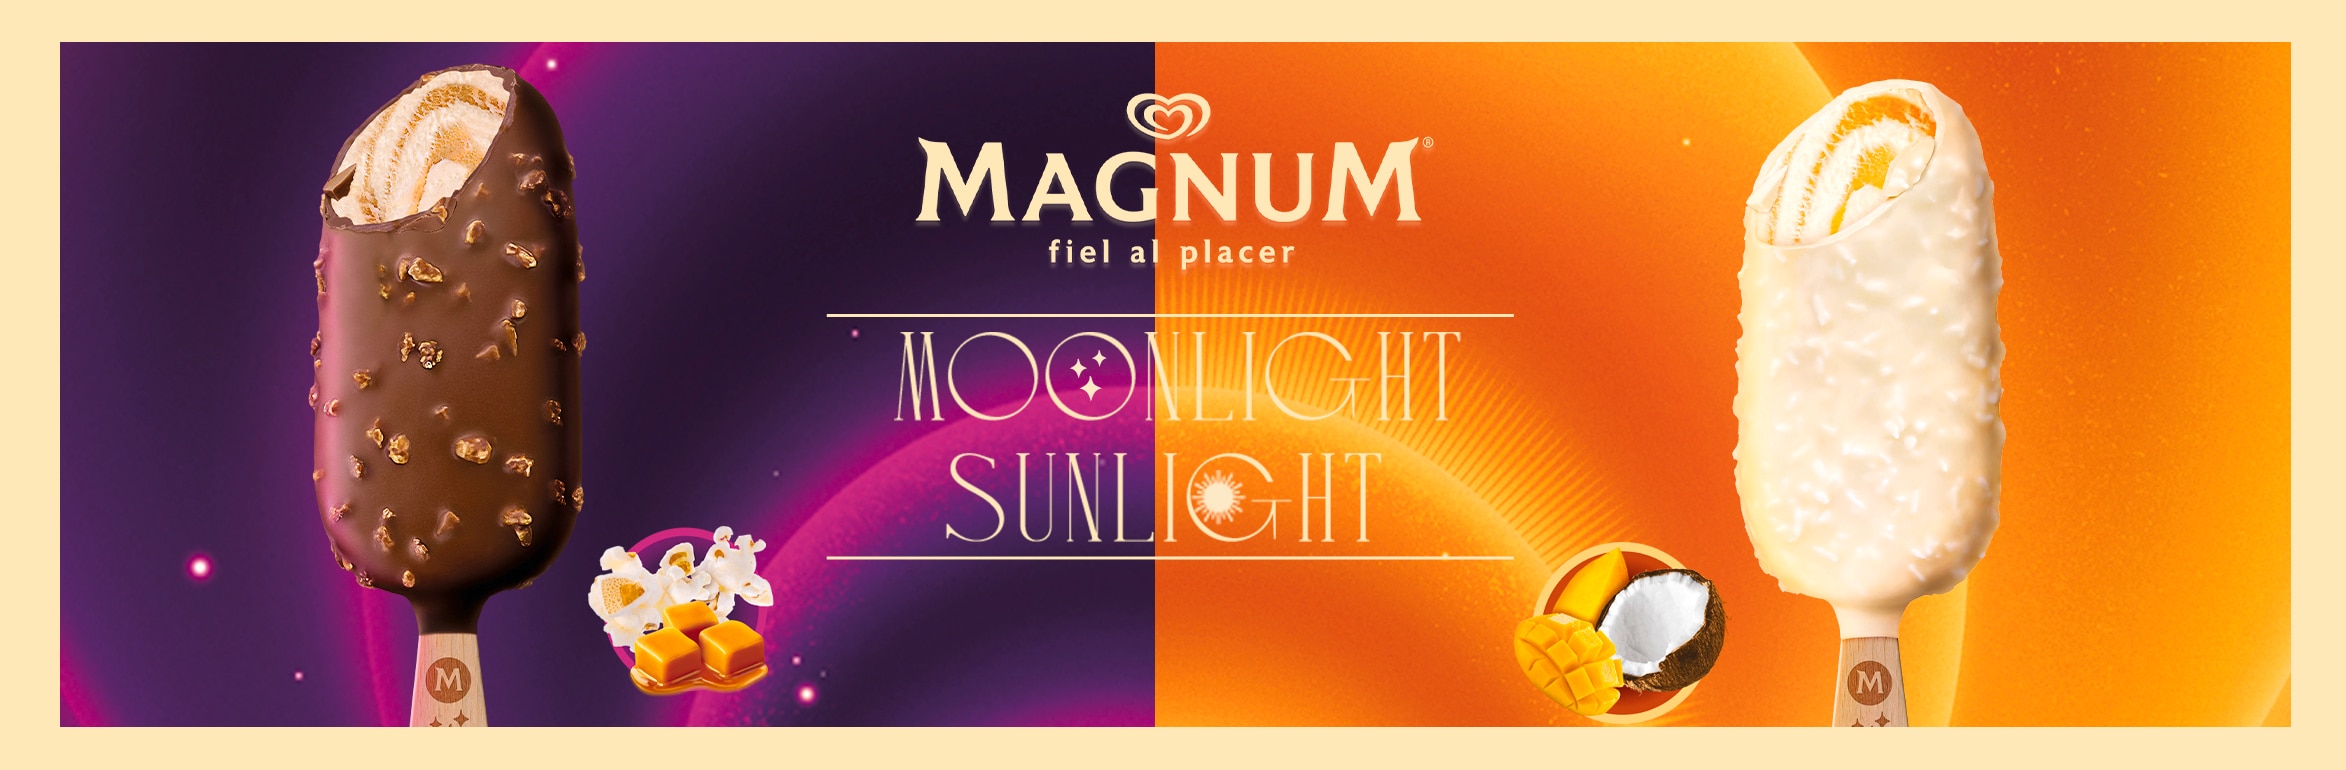 Magnum Sunllight & Moonlight